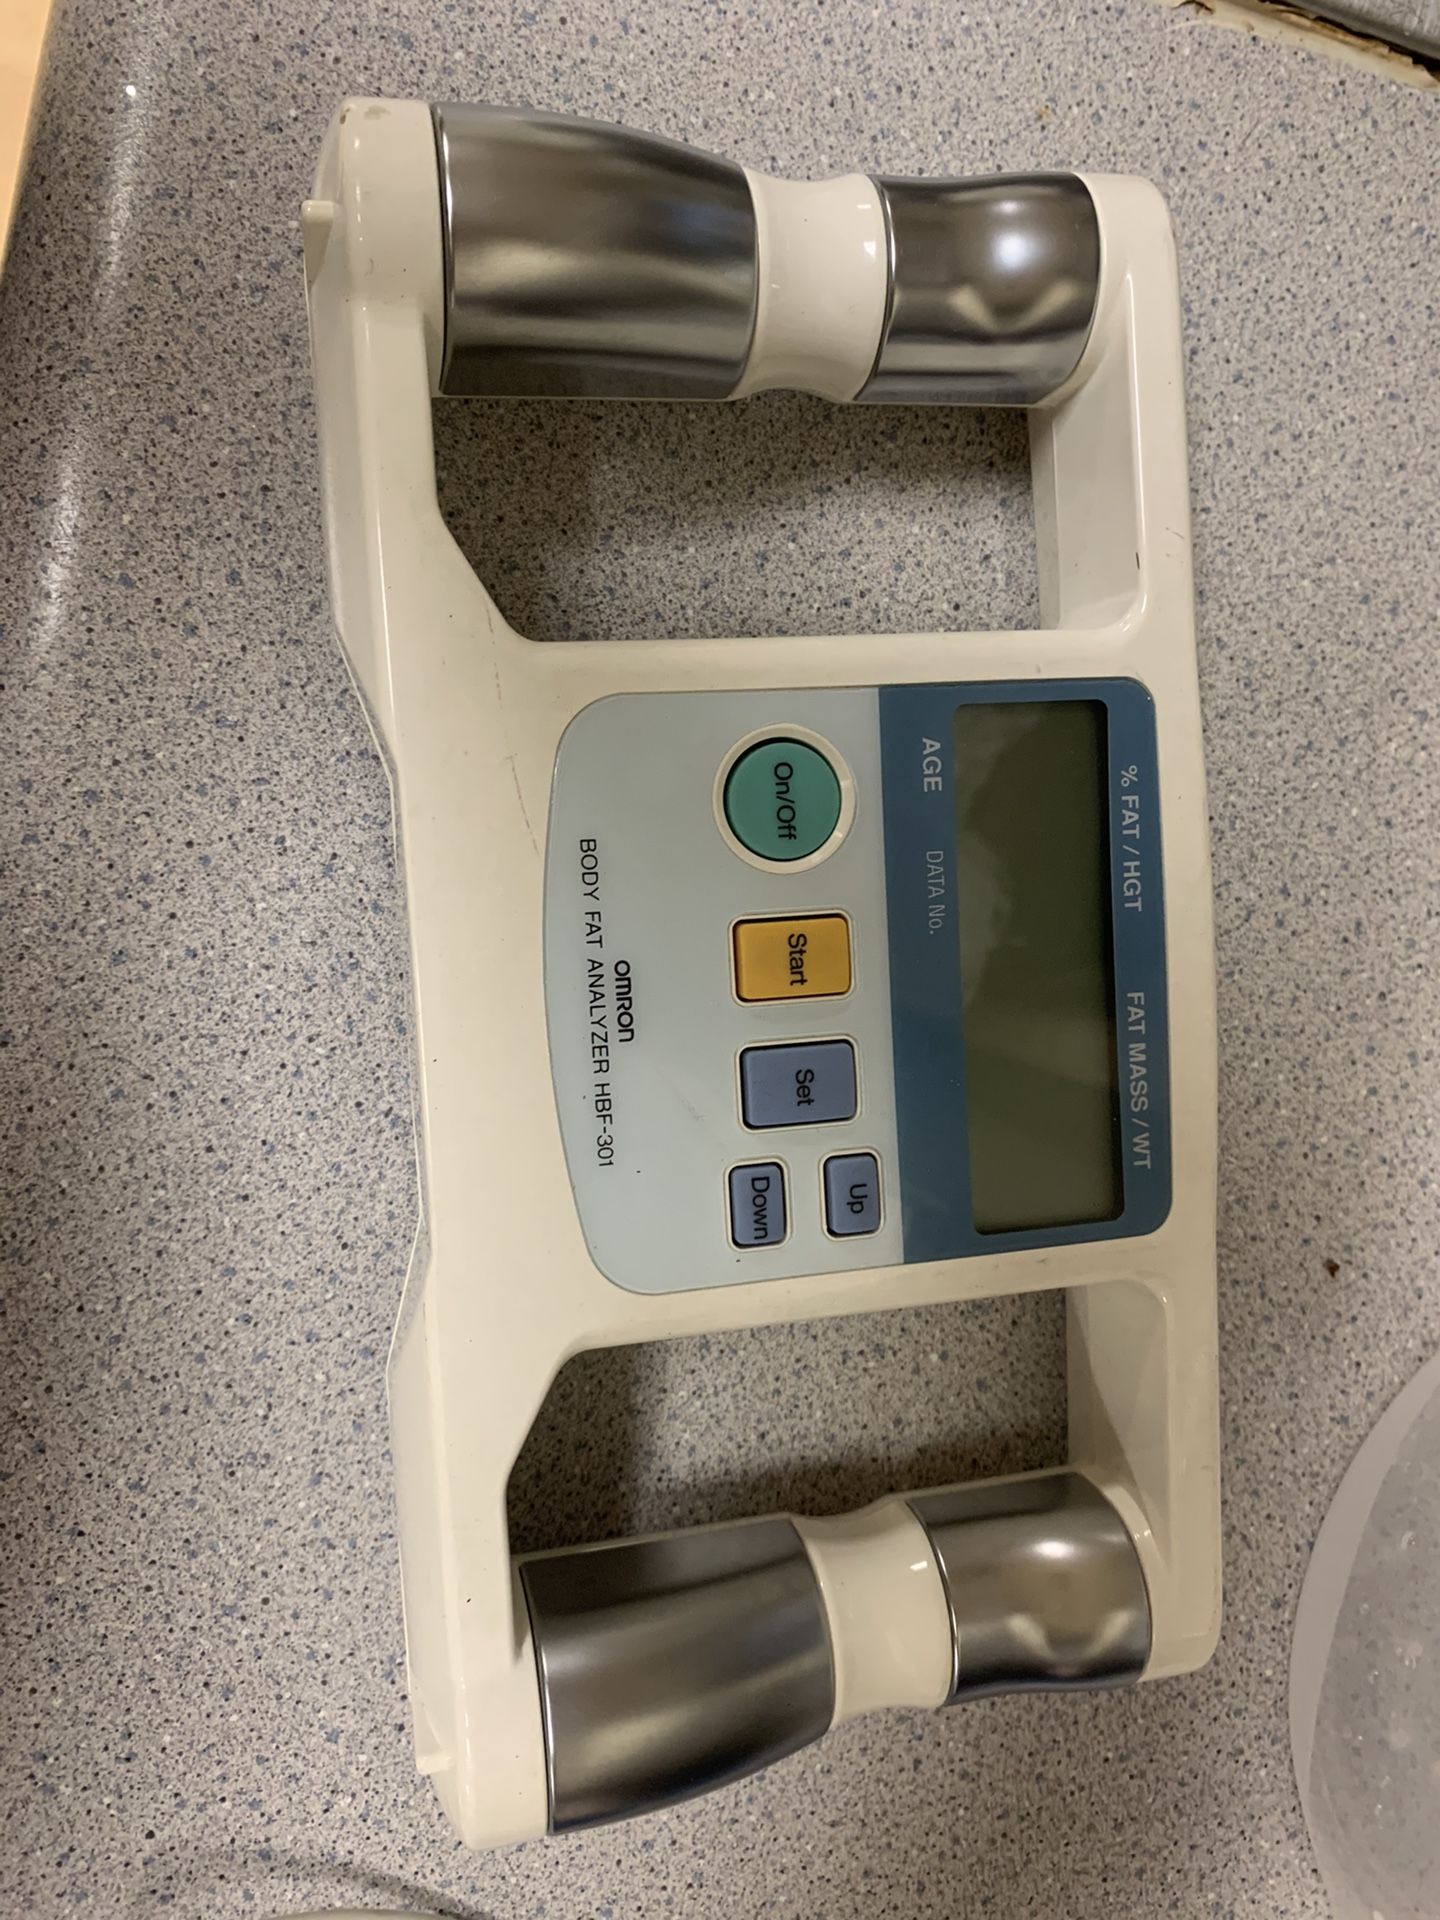 OMRON BODY LOGIC Body Fat Analyzer Model HBF-301BL Portable Handheld BMI Health